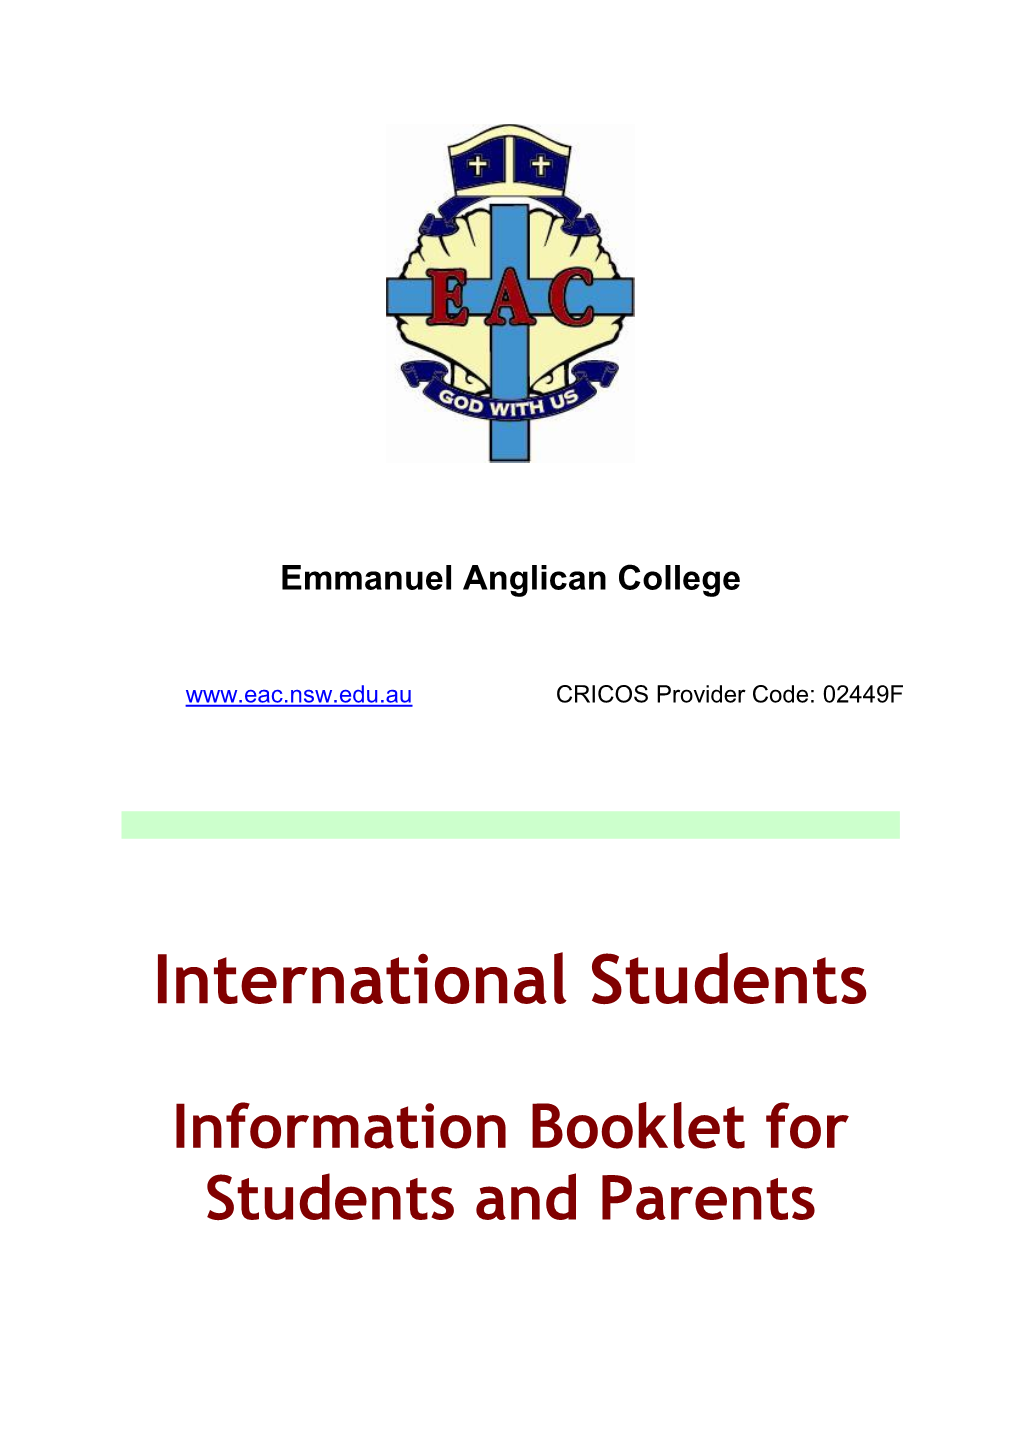 International Student Booklet